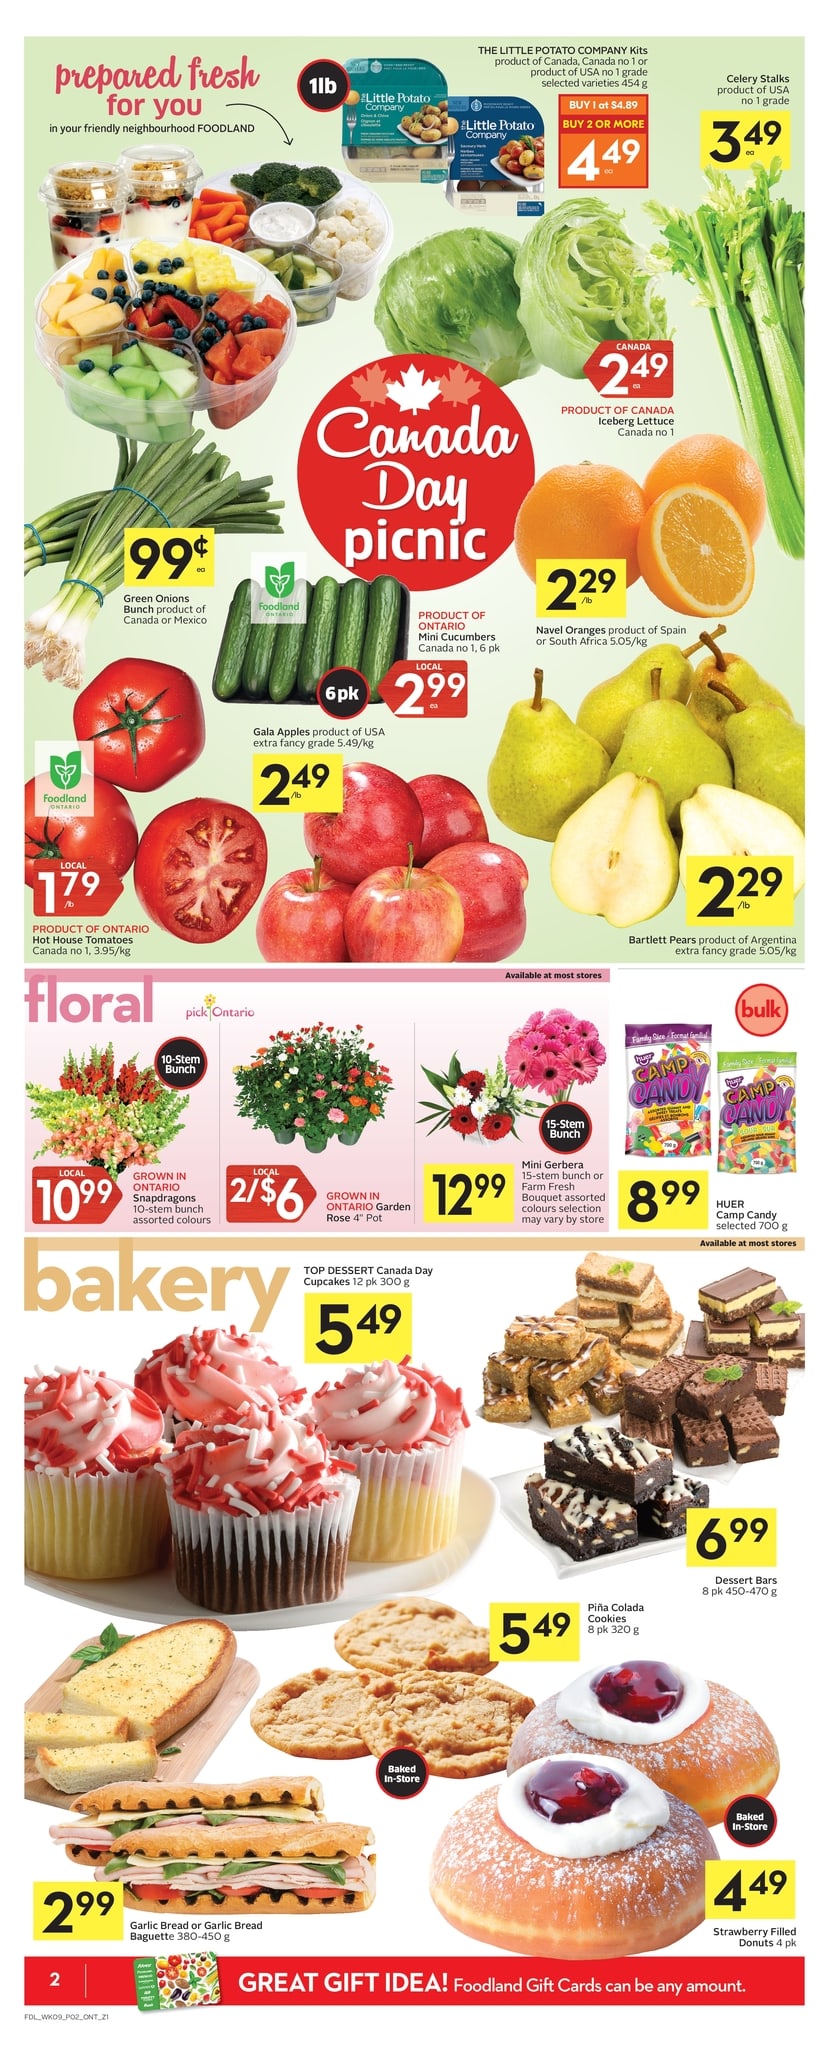 Foodland - Weekly Flyer Specials - Page 2